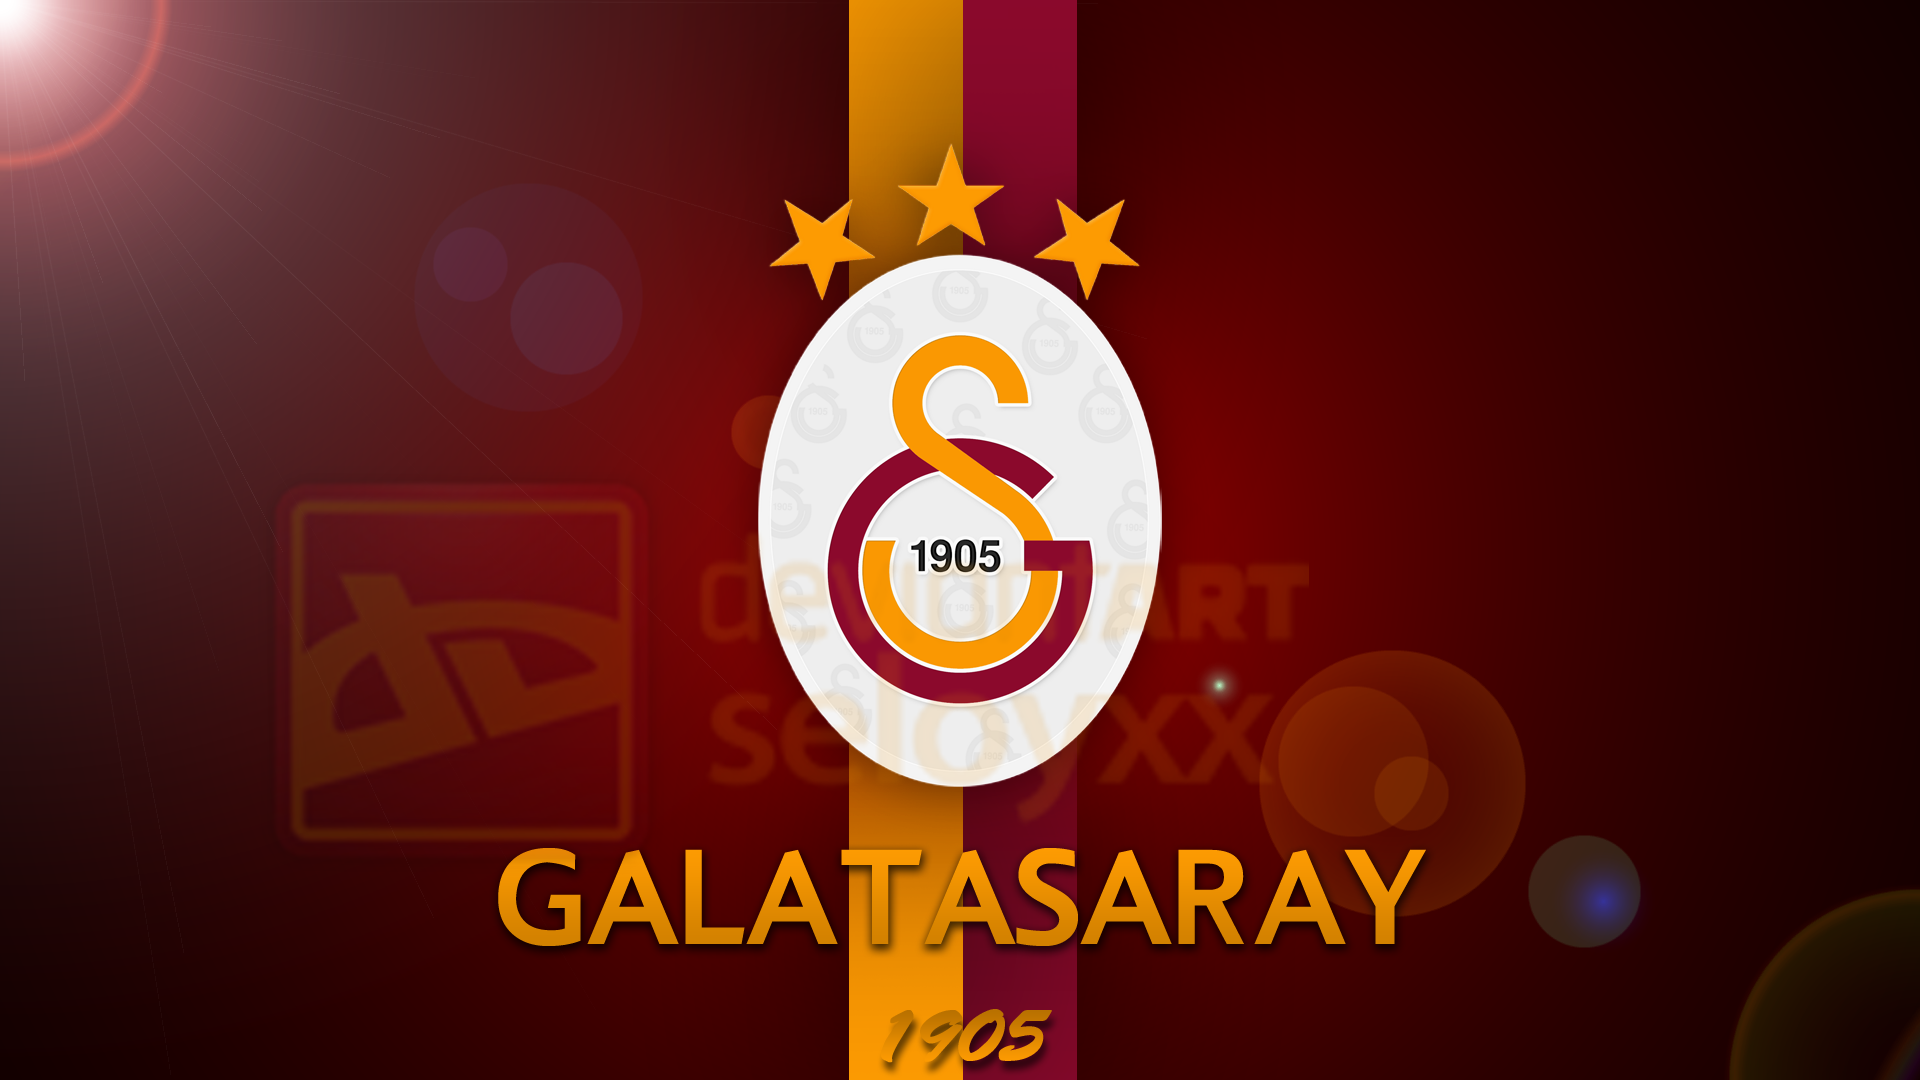 Galatasaray Wallpaper By Seloyxx